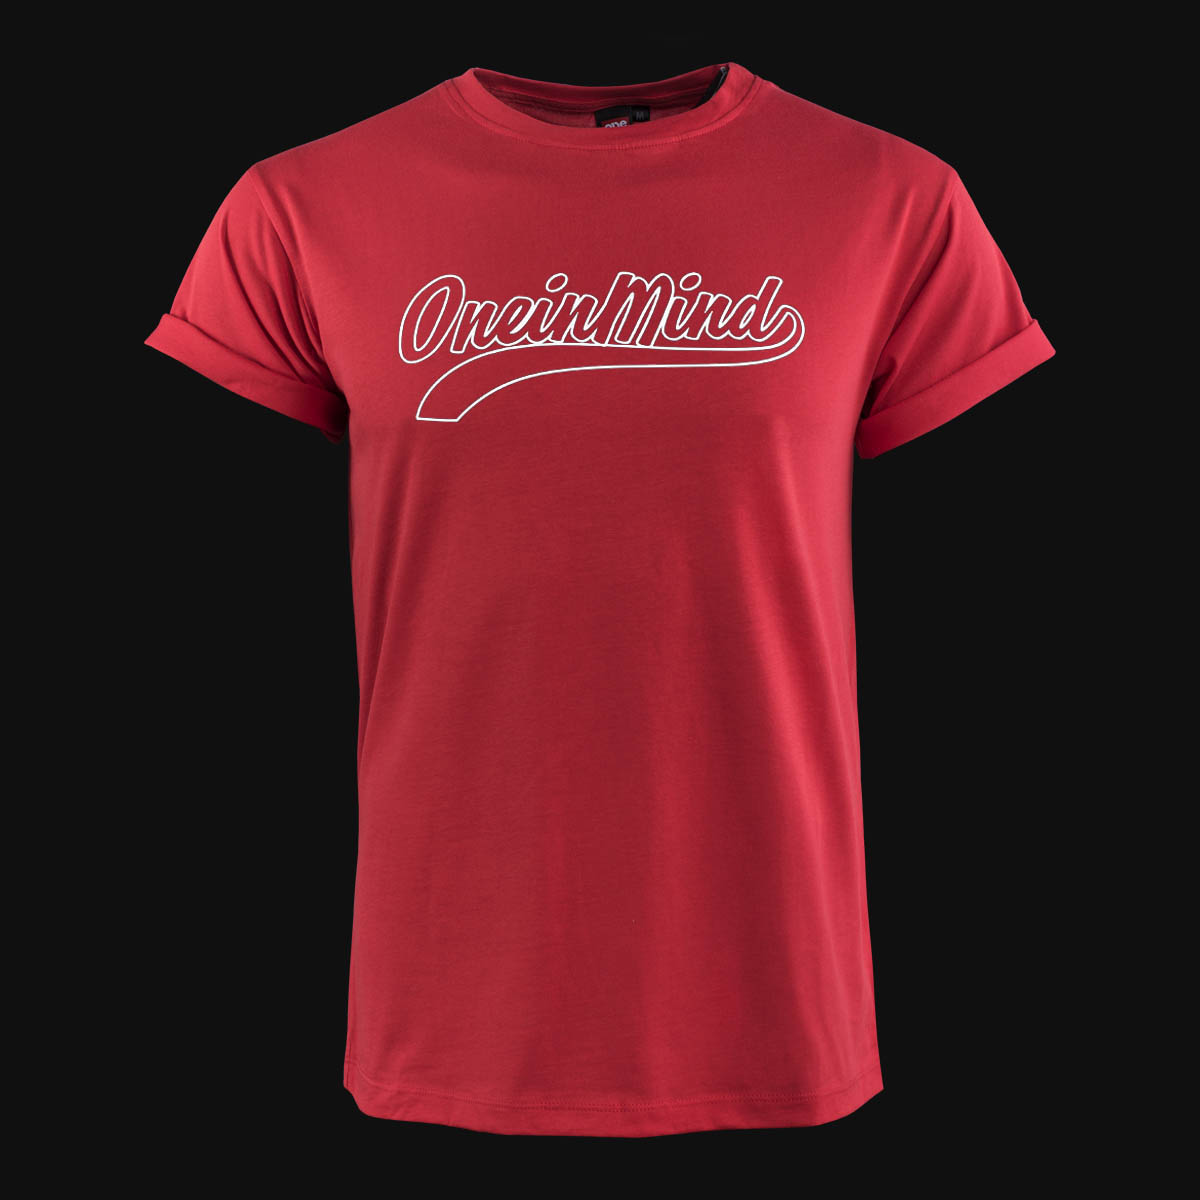 Men's T-shirt Red Manuscript » 1inmind.com